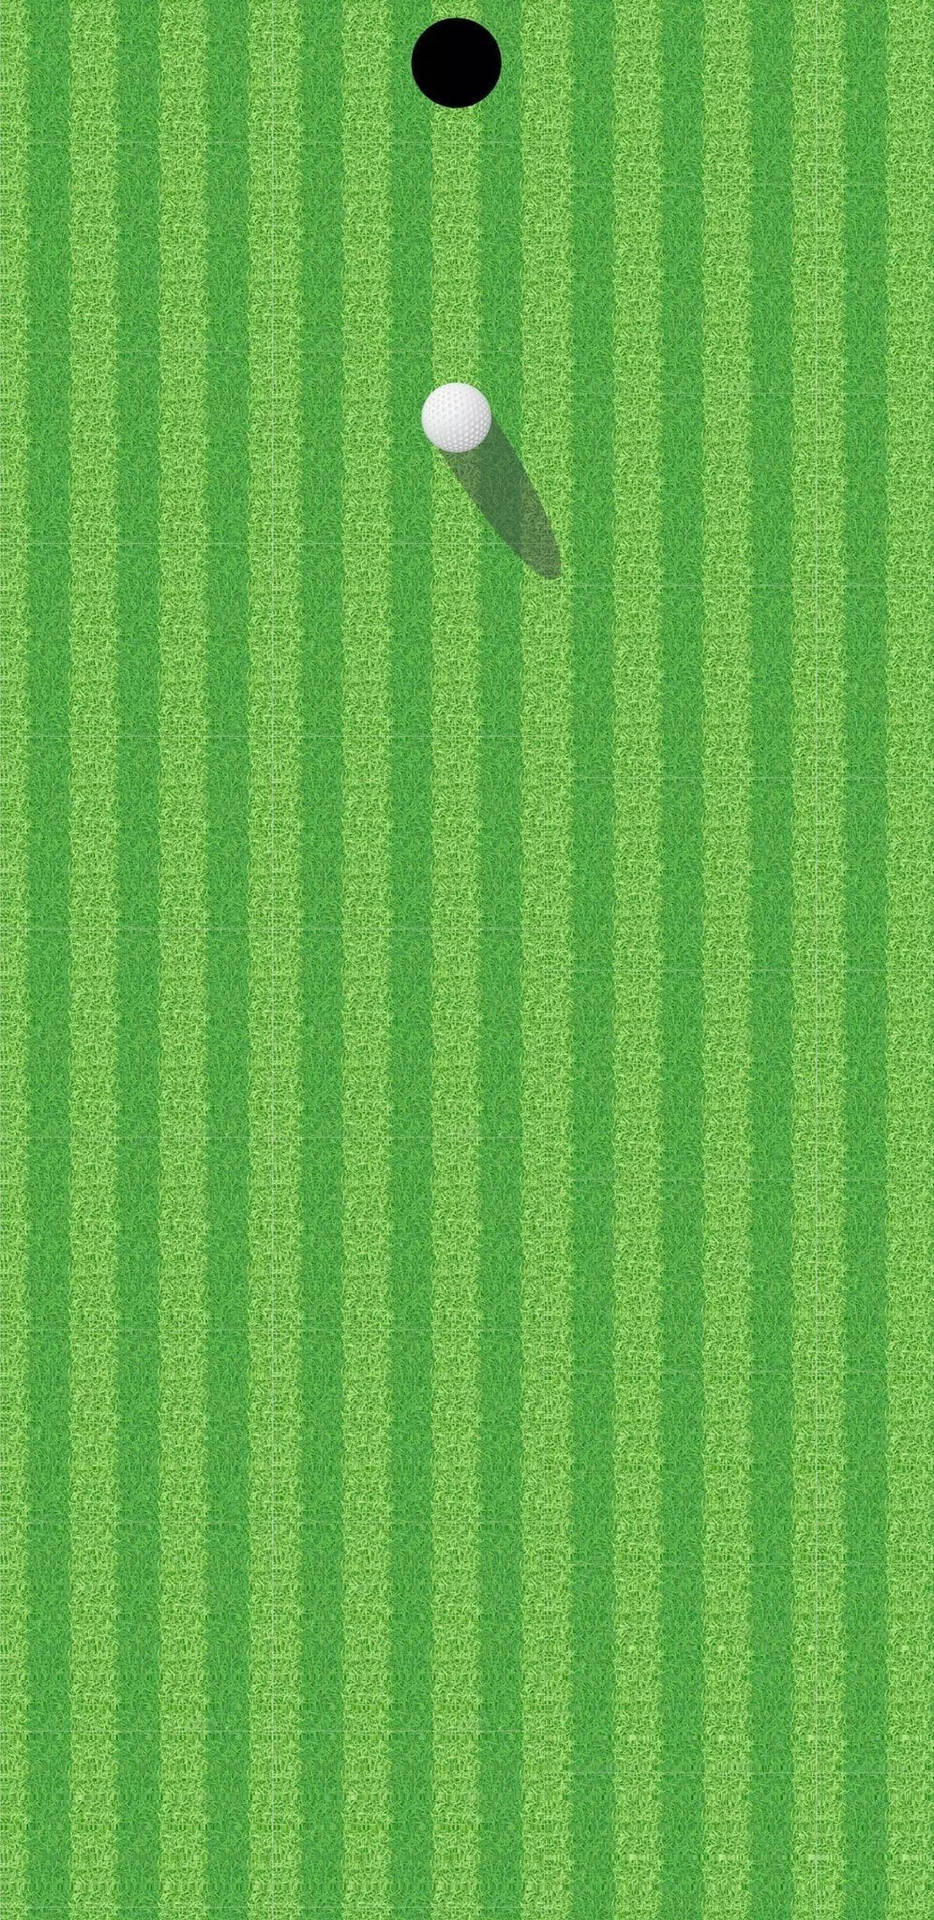 Caption: Striking Ace - Redmi Note 9 Punch Hole Wielding A Golf Ball Wallpaper